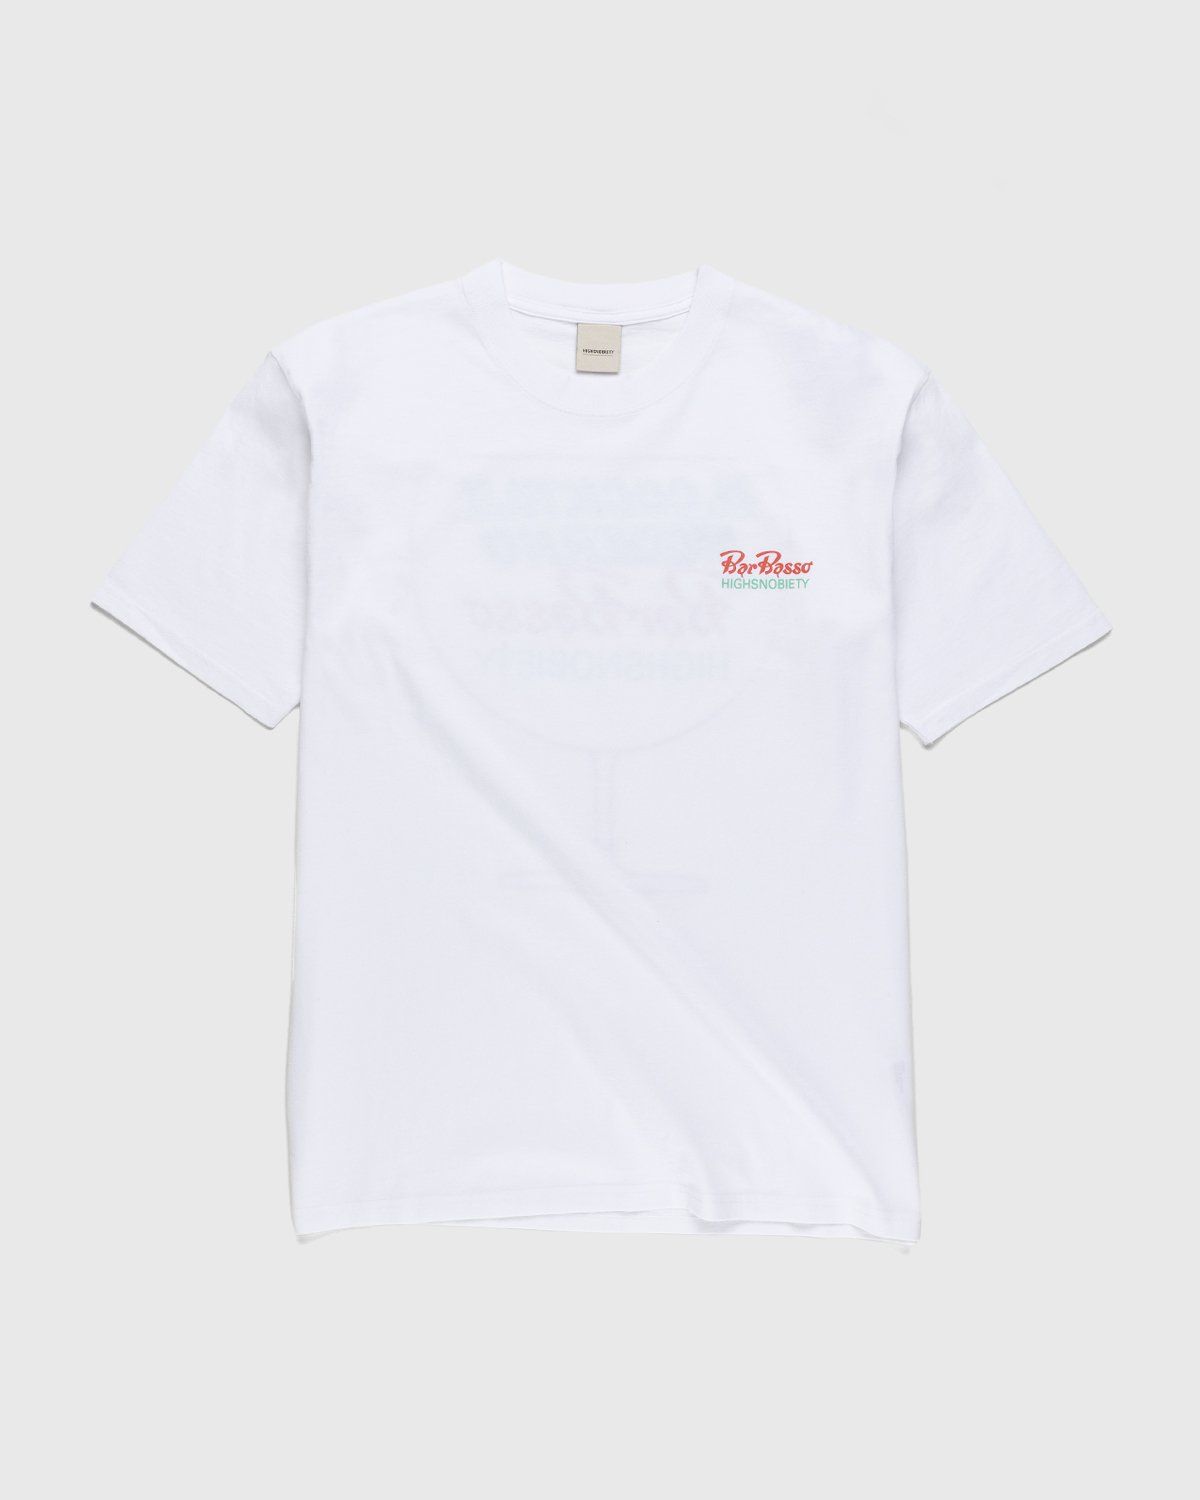 Bar Basso x Highsnobiety – Cocktail Glass T-Shirt White - T-Shirts - White - Image 2